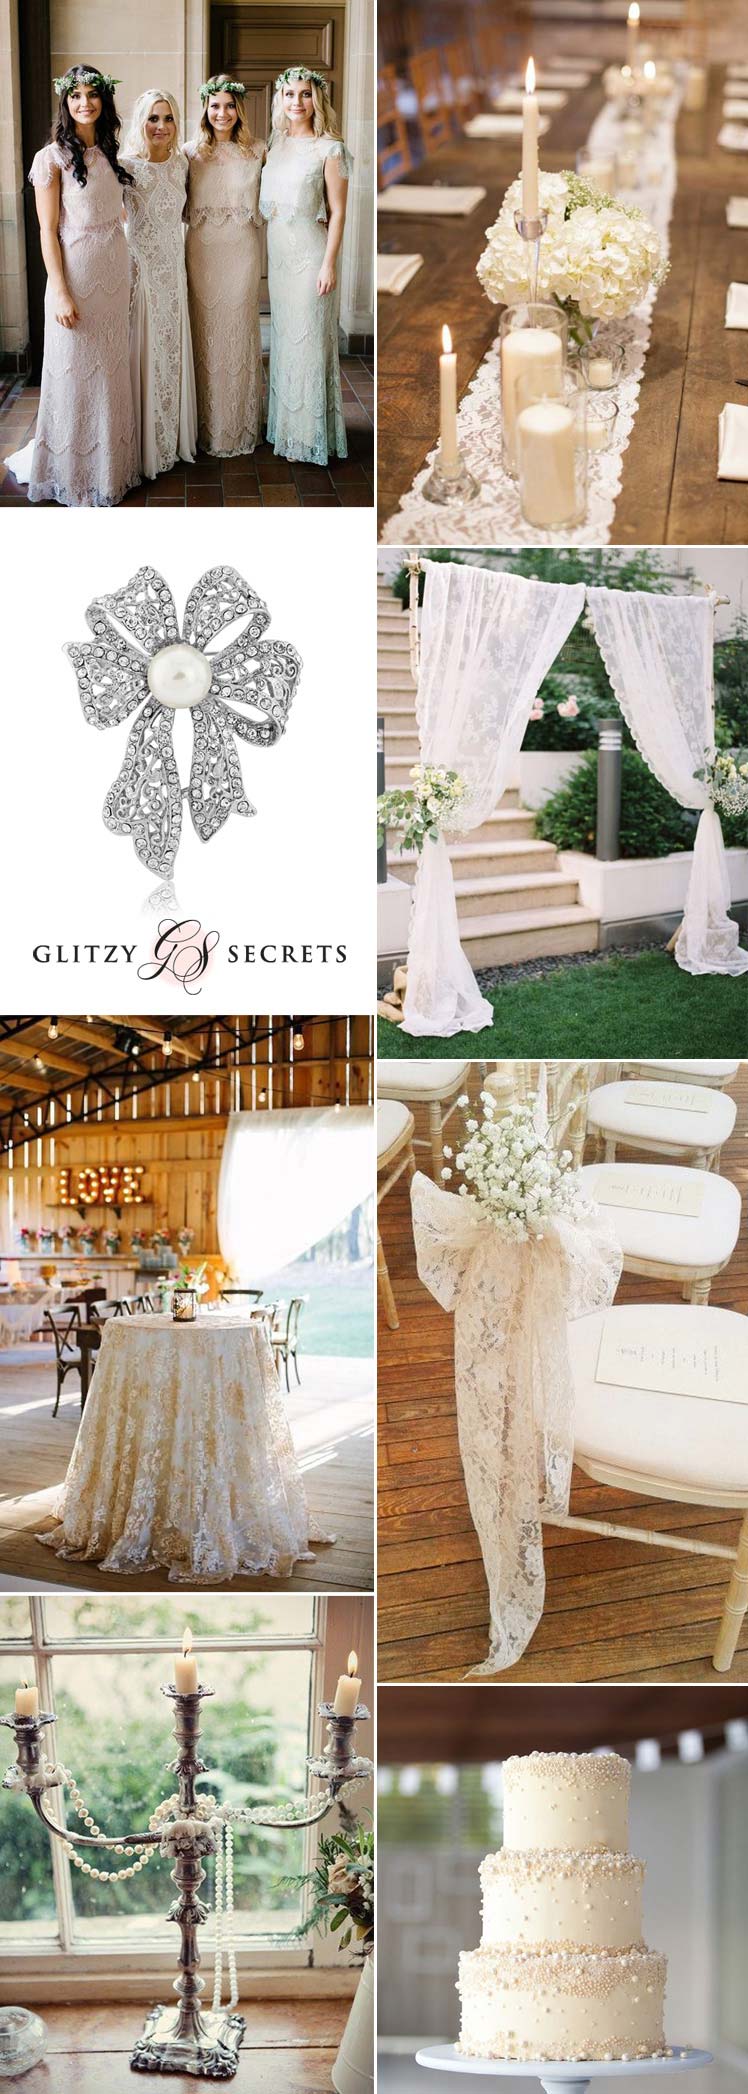 Elegant lace and pearl wedding theme ideas